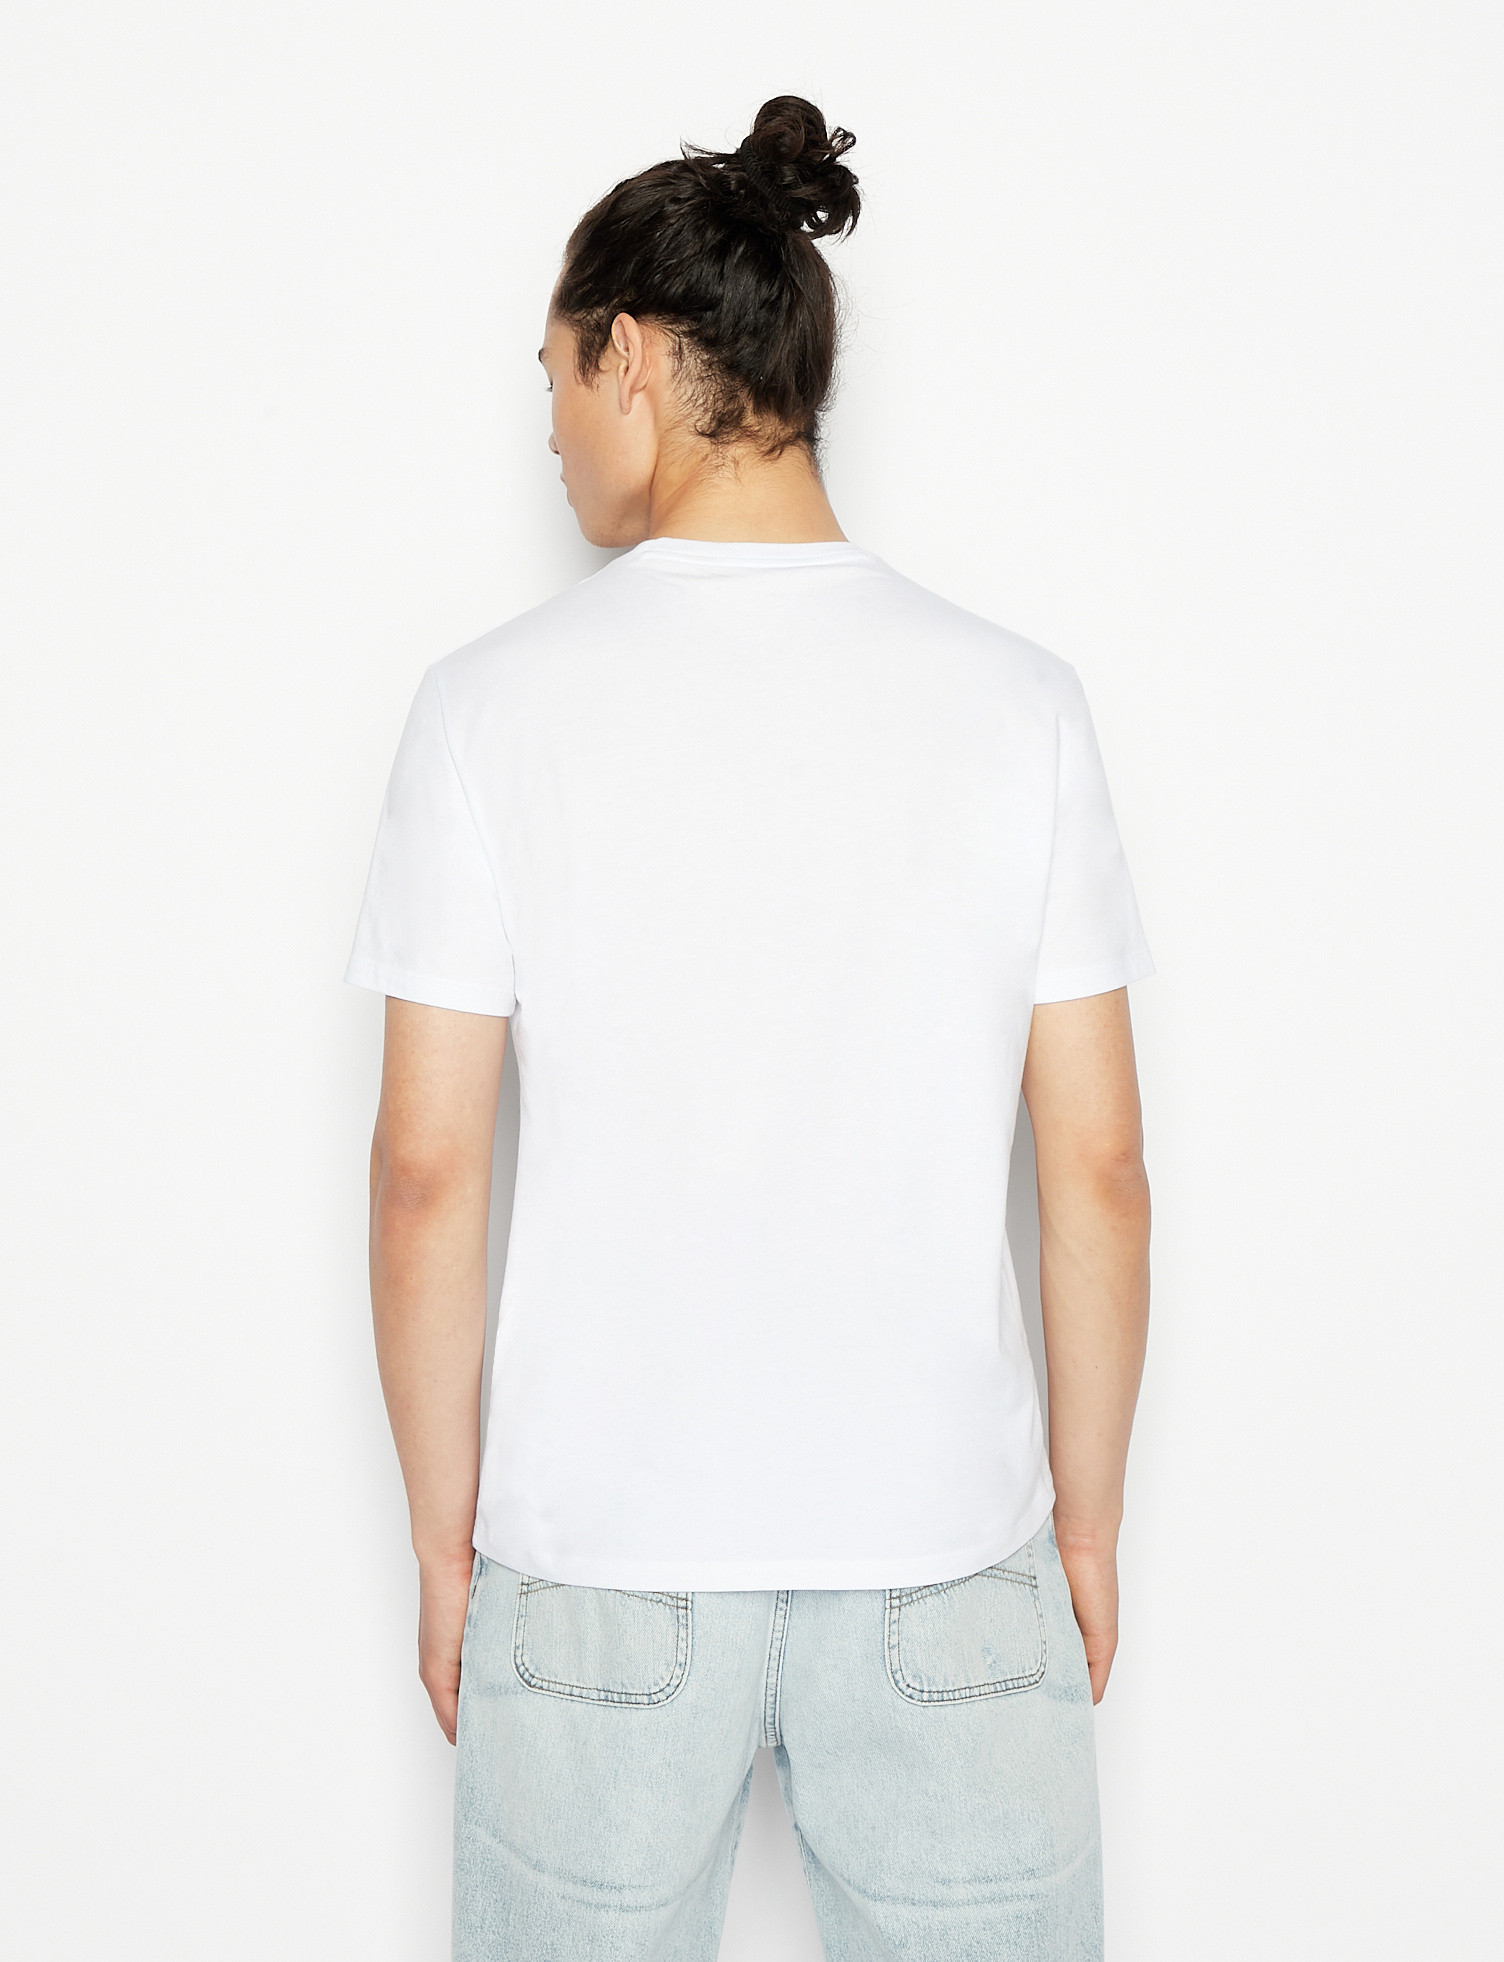 Armani Exchange - T-shirt regular fit in cotone organico con logo, Bianco, large image number 4